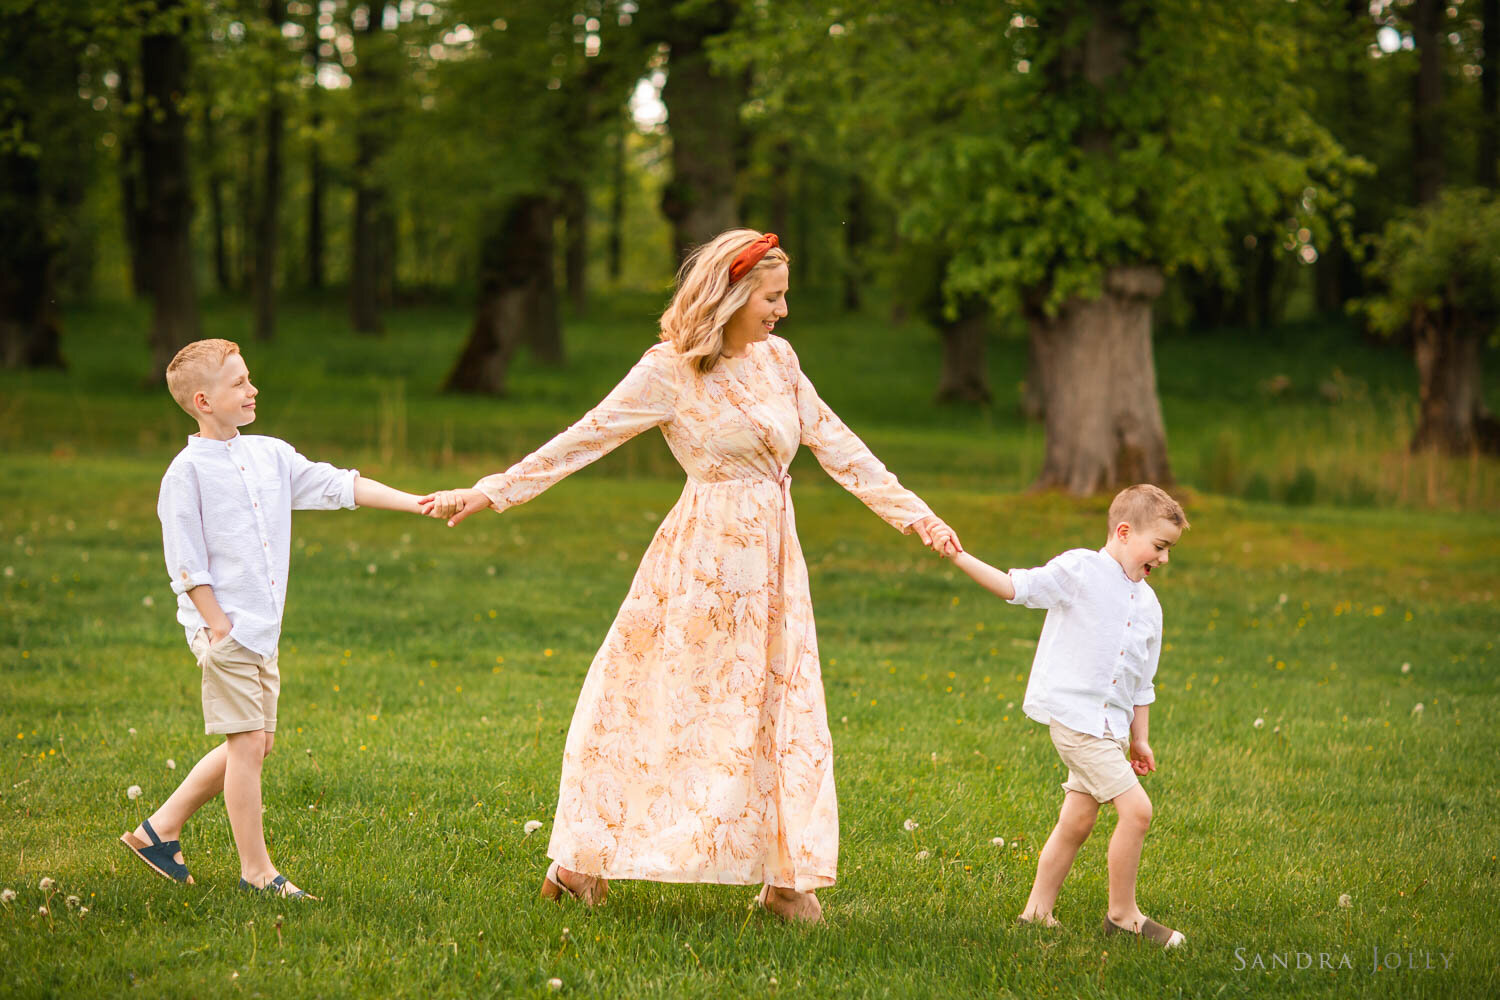 mom-walking-with-kids-by-stockholm-photographer-sandra-jolly.jpg